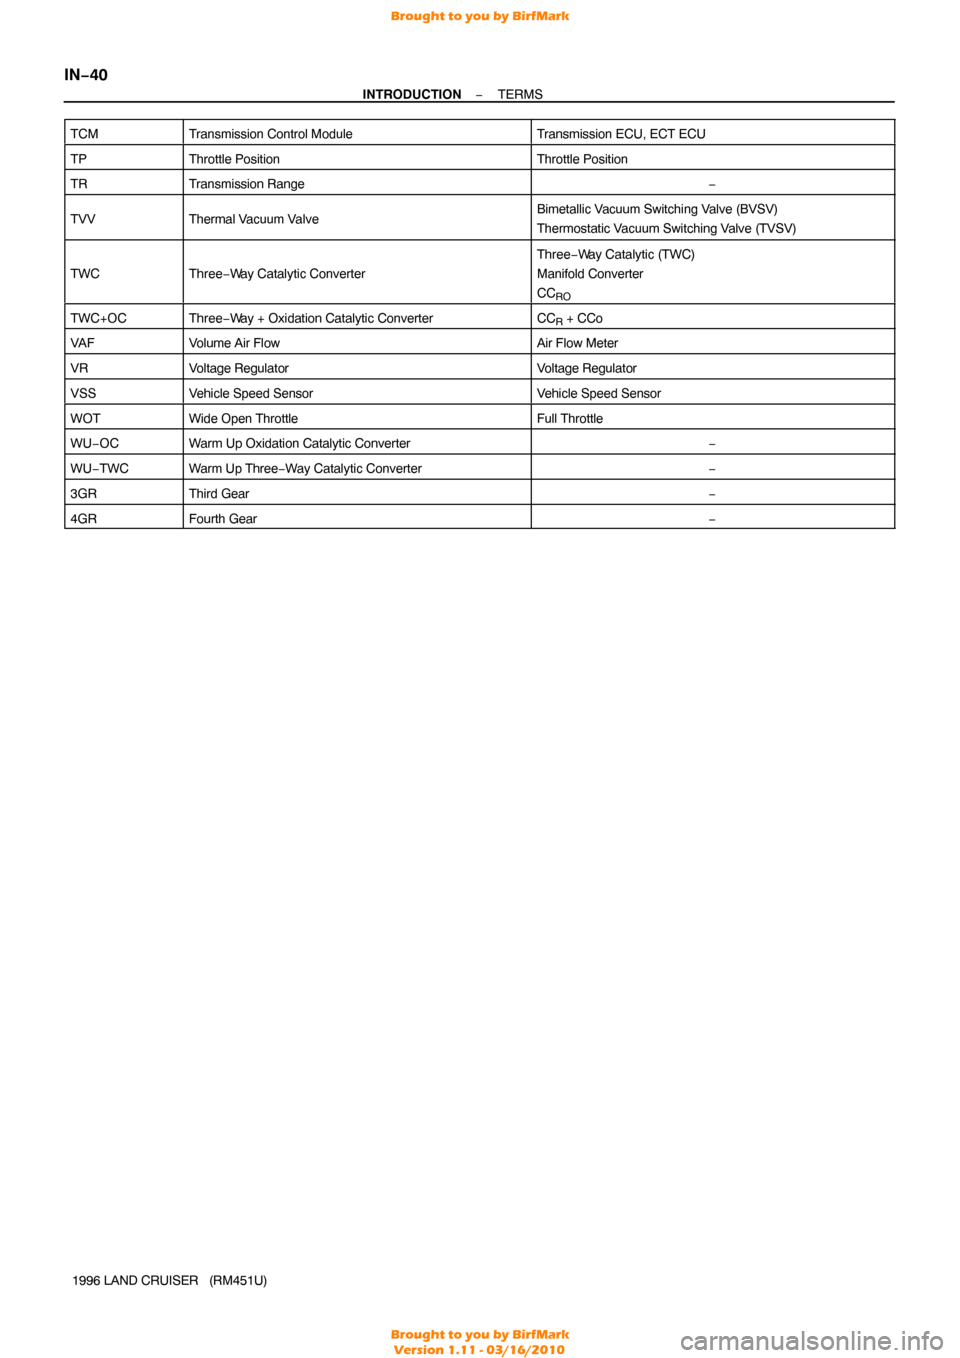 TOYOTA LAND CRUISER 1996 J80 Workshop Manual IN−40
−
INTRODUCTION TERMS
1996 LAND CRUISER   (RM451U)
TCM
Transmission Control ModuleTransmission ECU, ECT ECU
TPThrottle PositionThrottle Position
TRTransmission Range−
TVVThermal Vacuum V
al